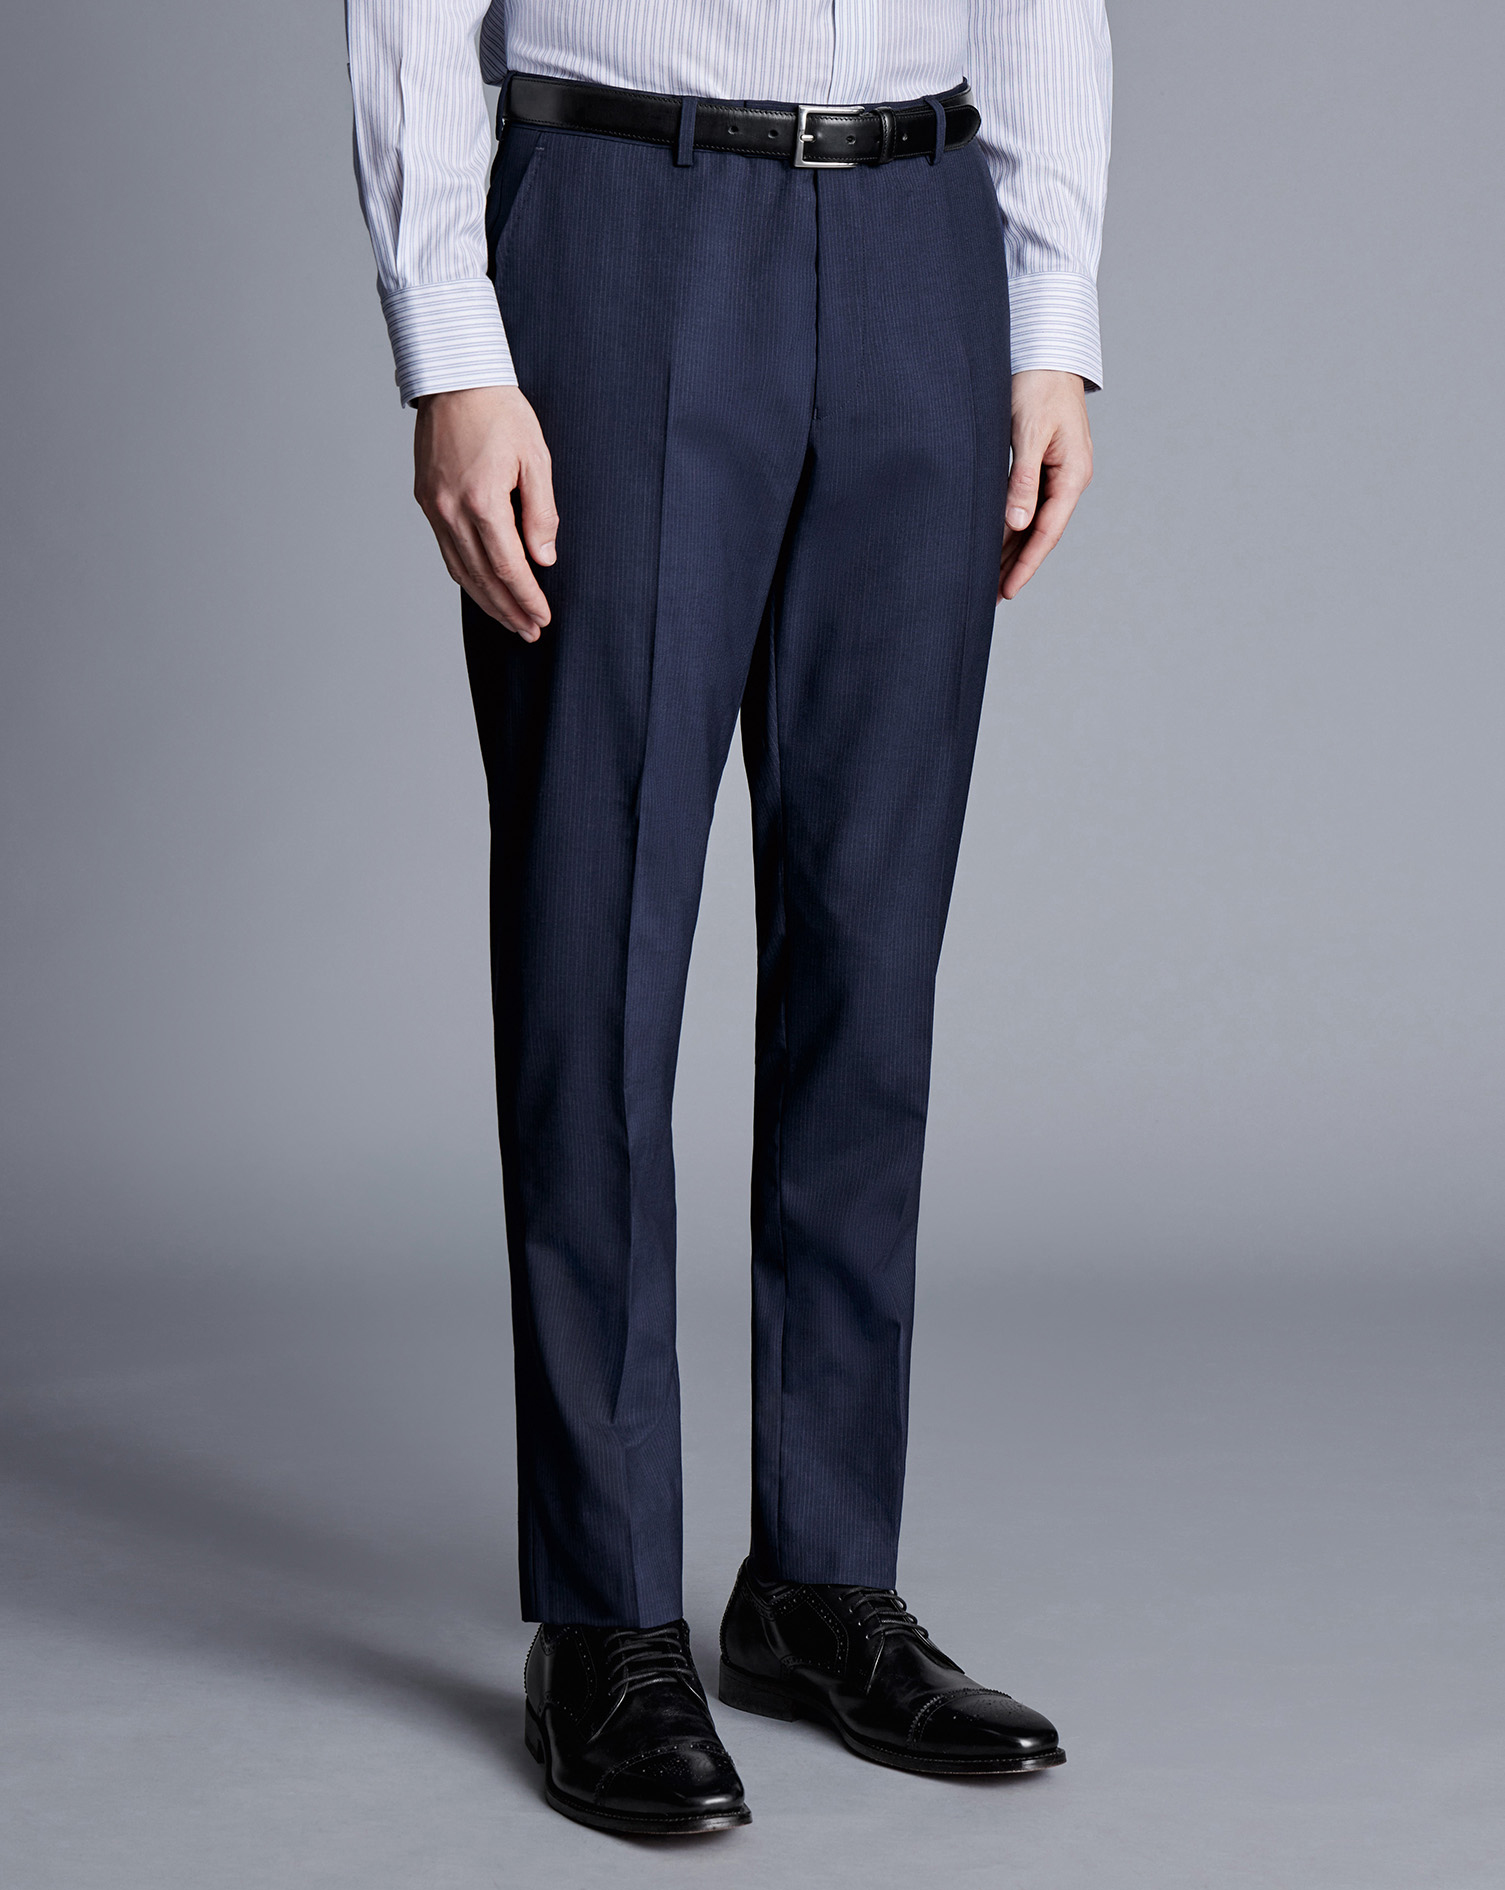 Men's Charles Tyrwhitt Stripe Suit Trousers - Navy Blue Size 36/38 Wool
